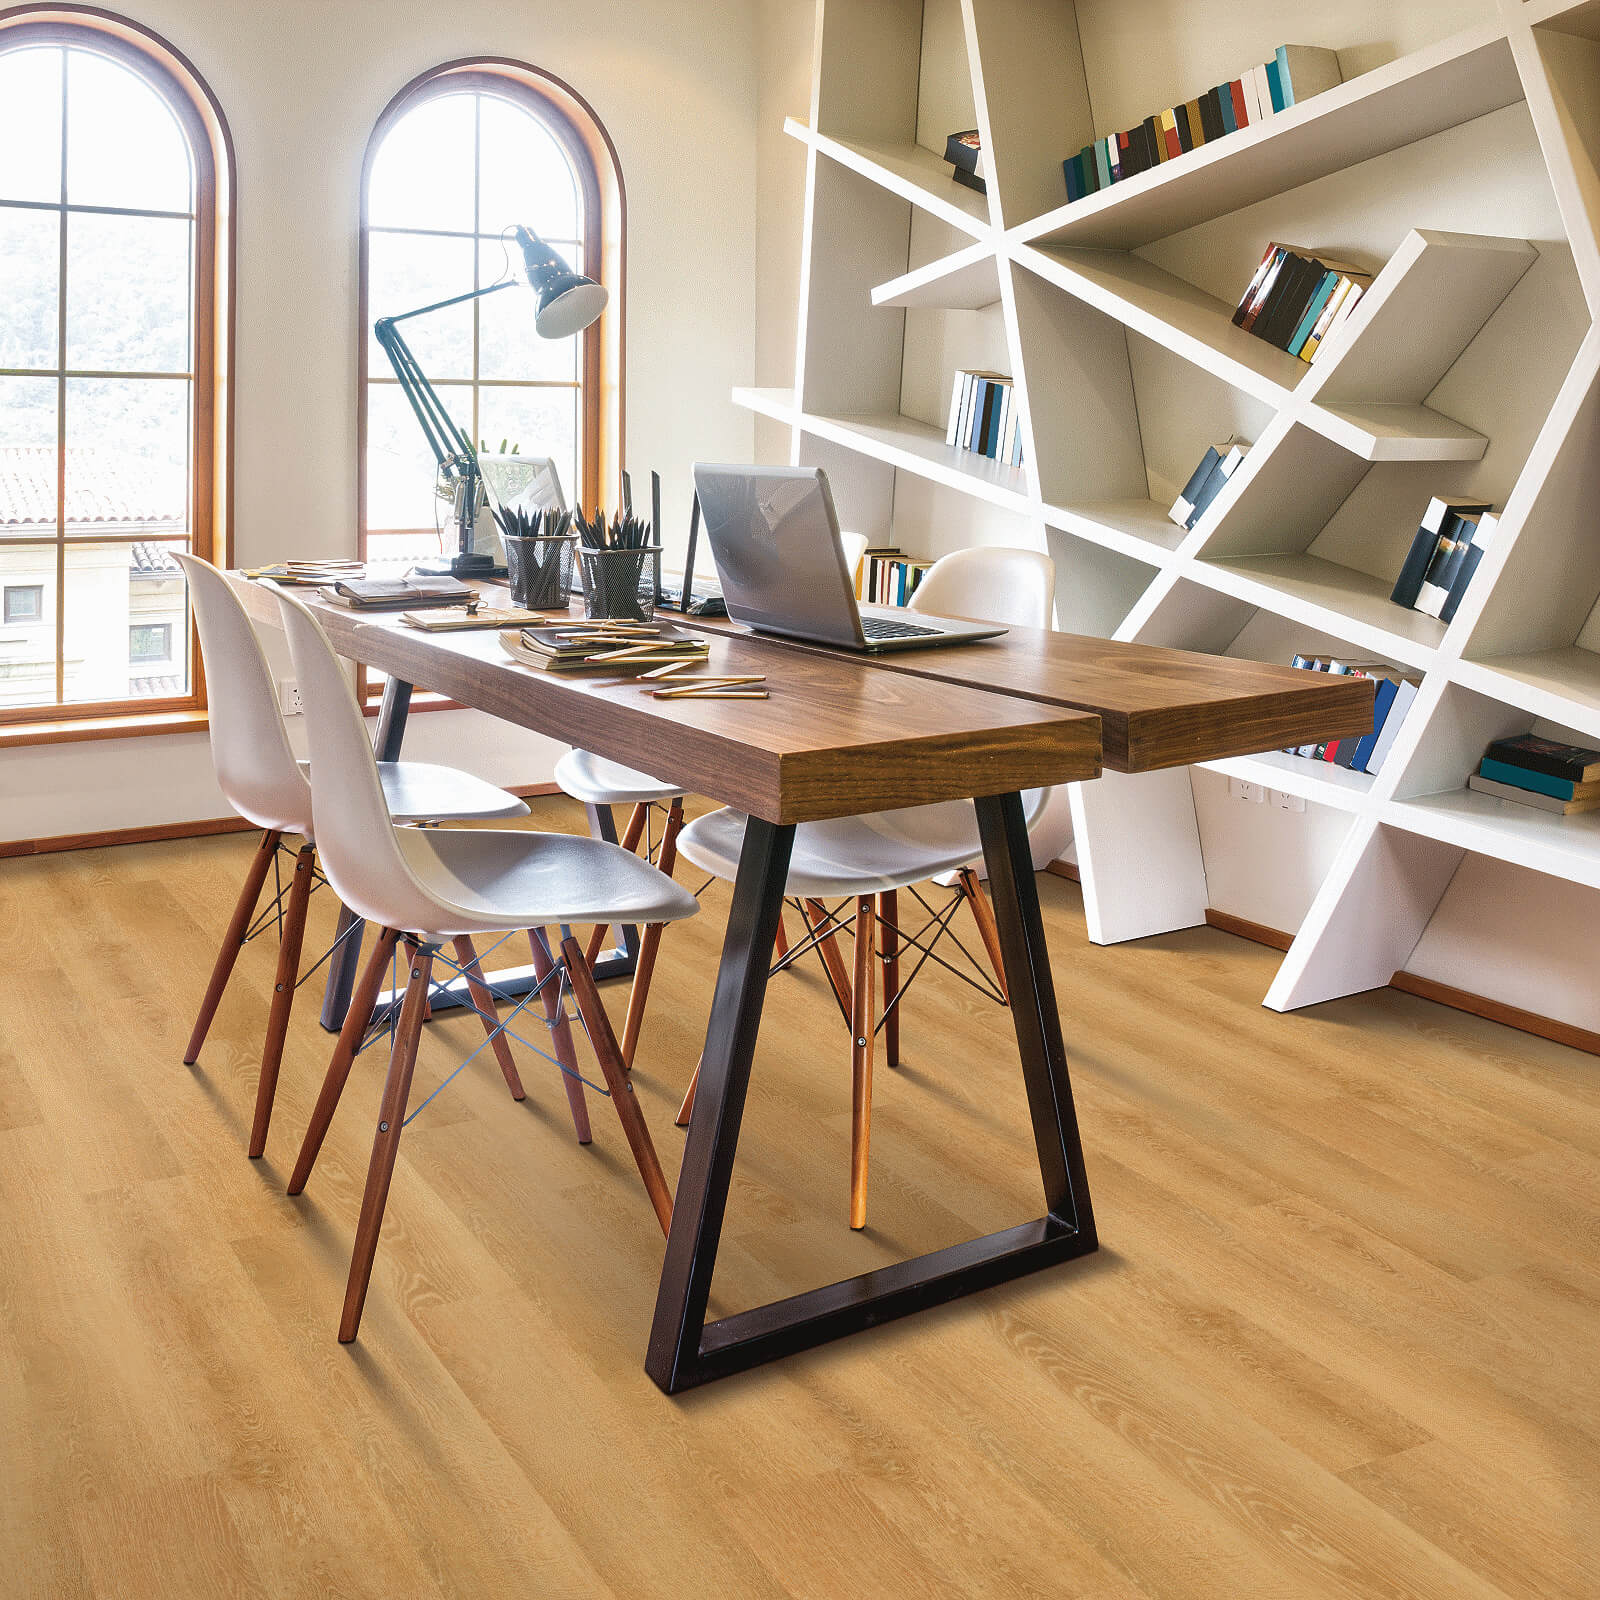 Vinyl flooring for study room | Carpetland USA